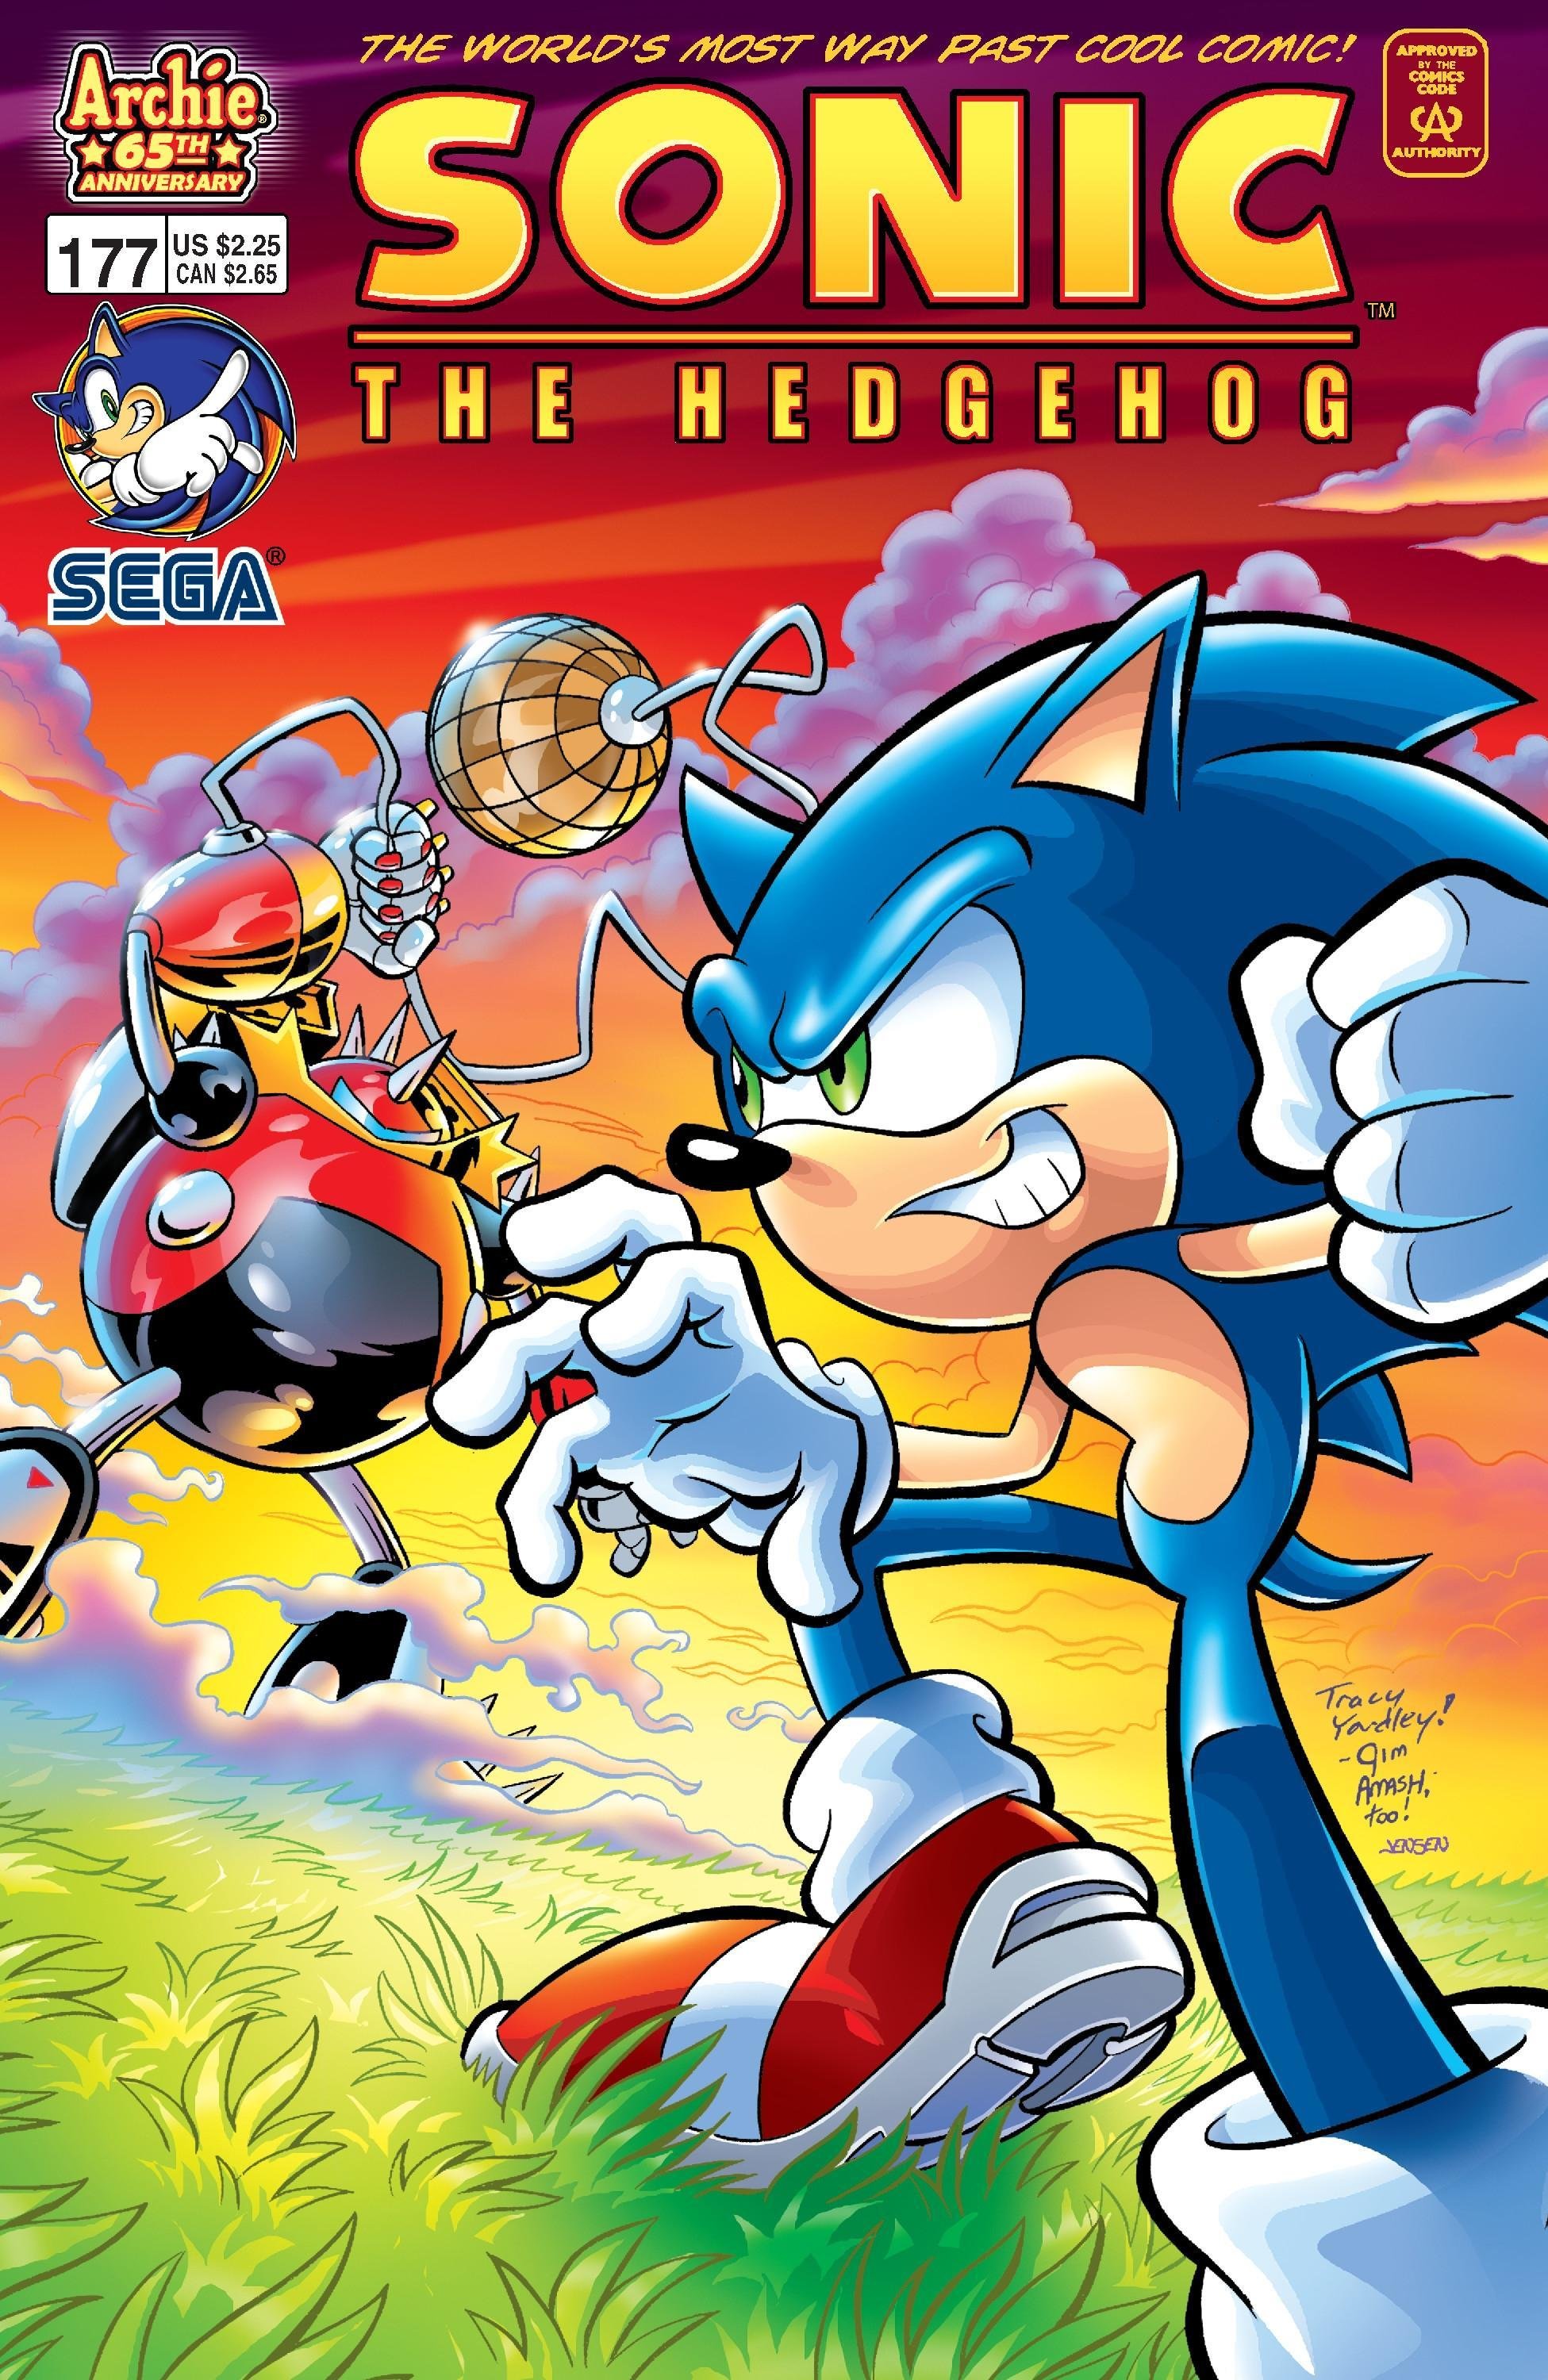 Sonic the Hedgehog 177 (September 2007)